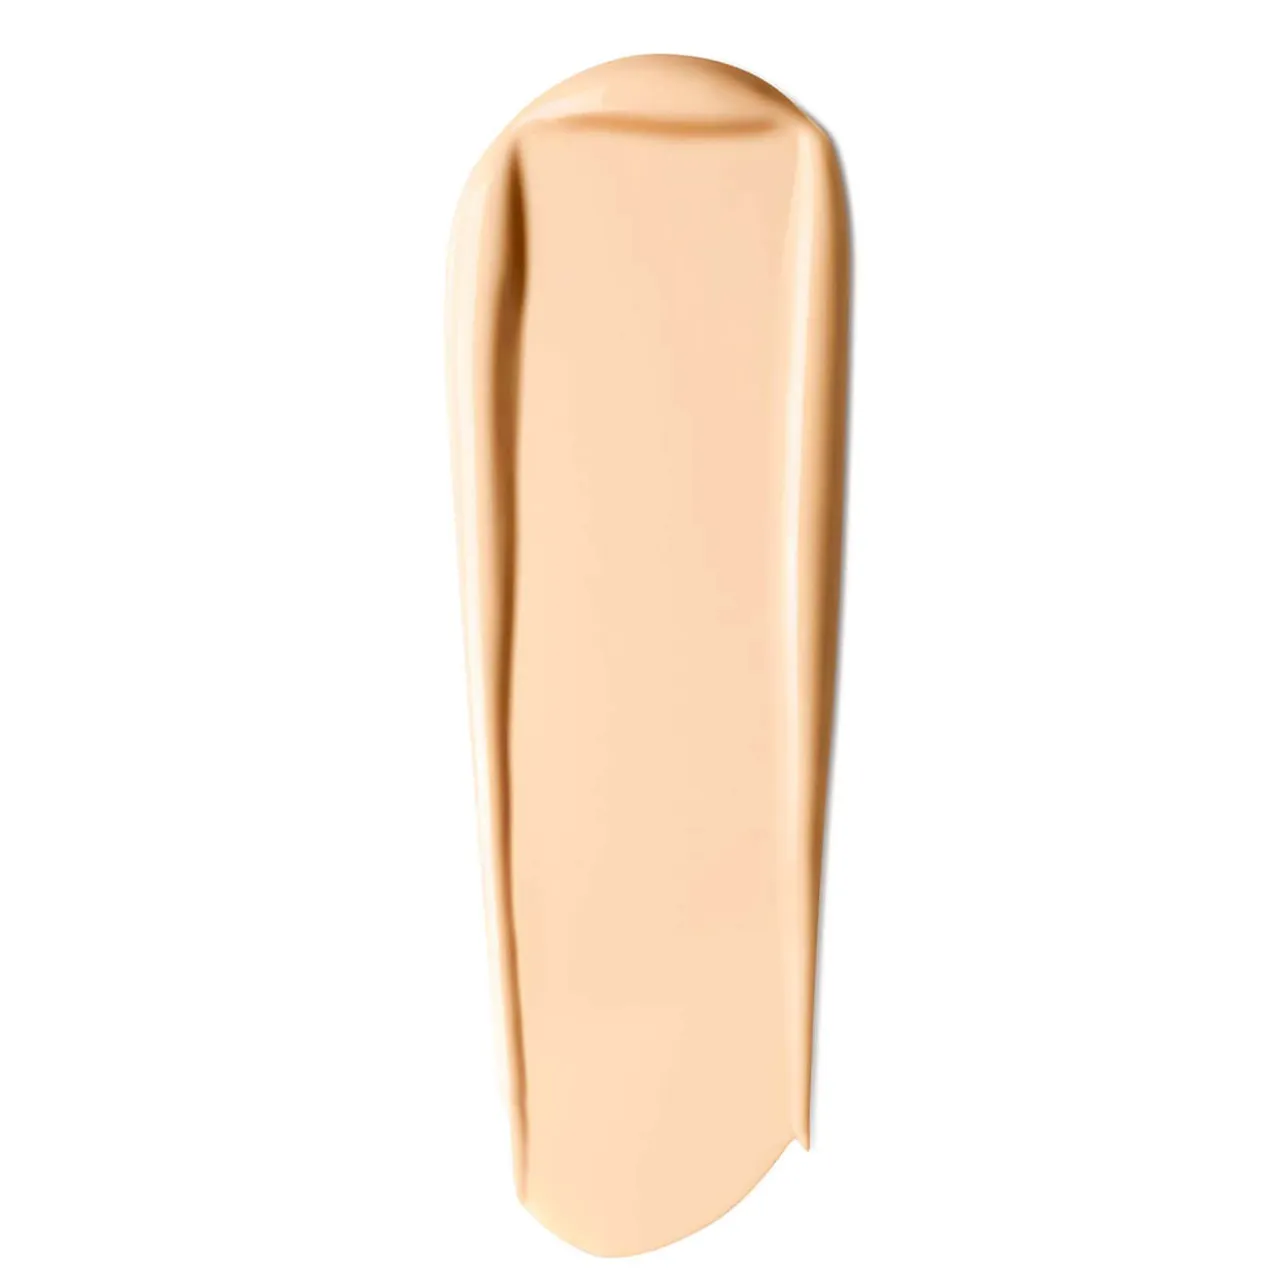 Guerlain Parure Gold Skin 24H No-Transfer High Perfection Foundation 35ml (Various Shades) - 2W Warm / Doré